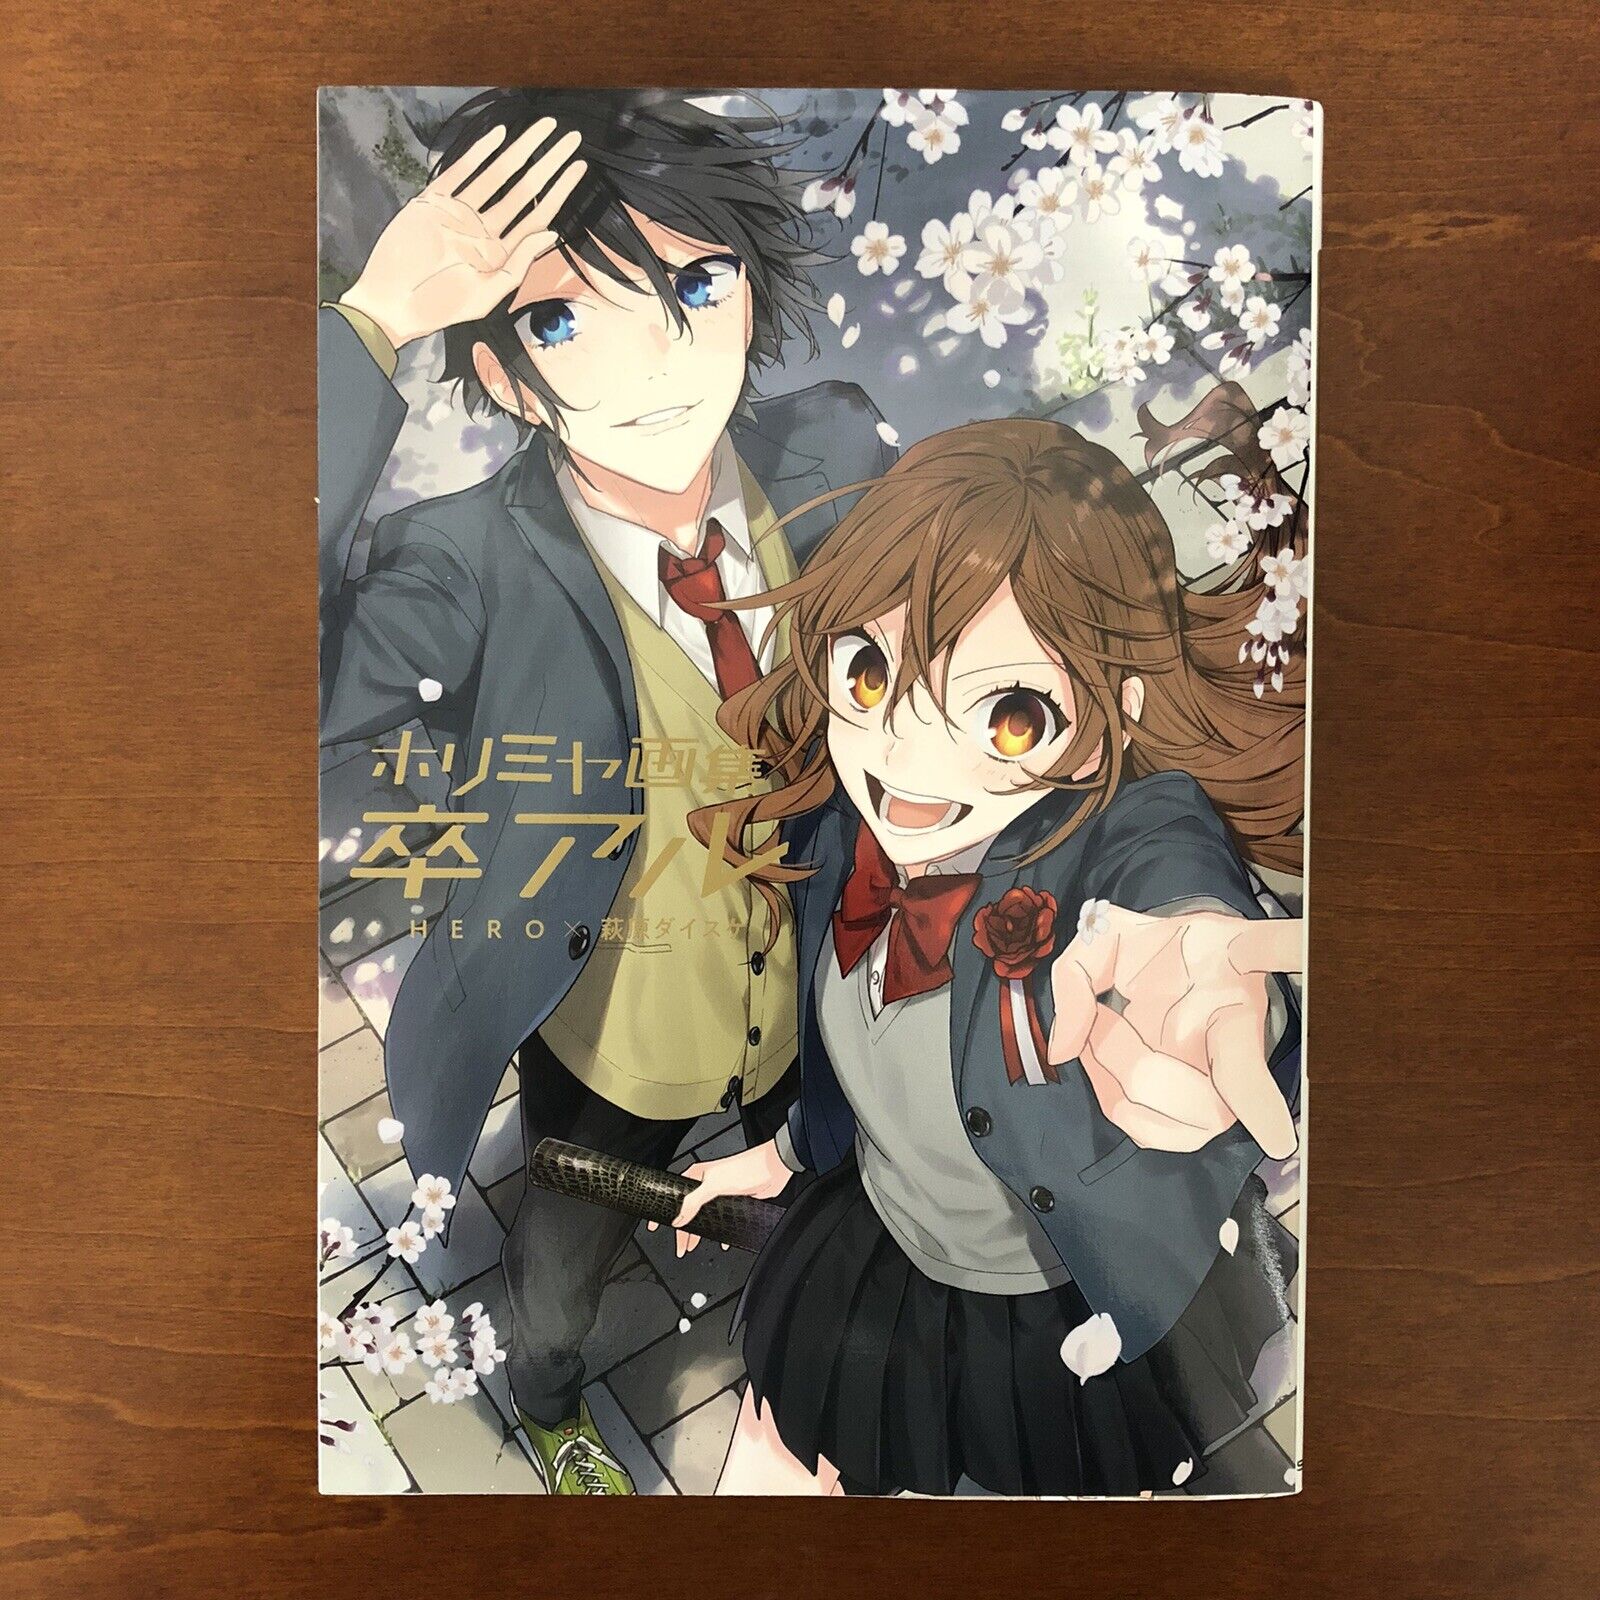 Horimiya Art Book Graduation Album Daisuke Hagiwara Illustration Anime Manga